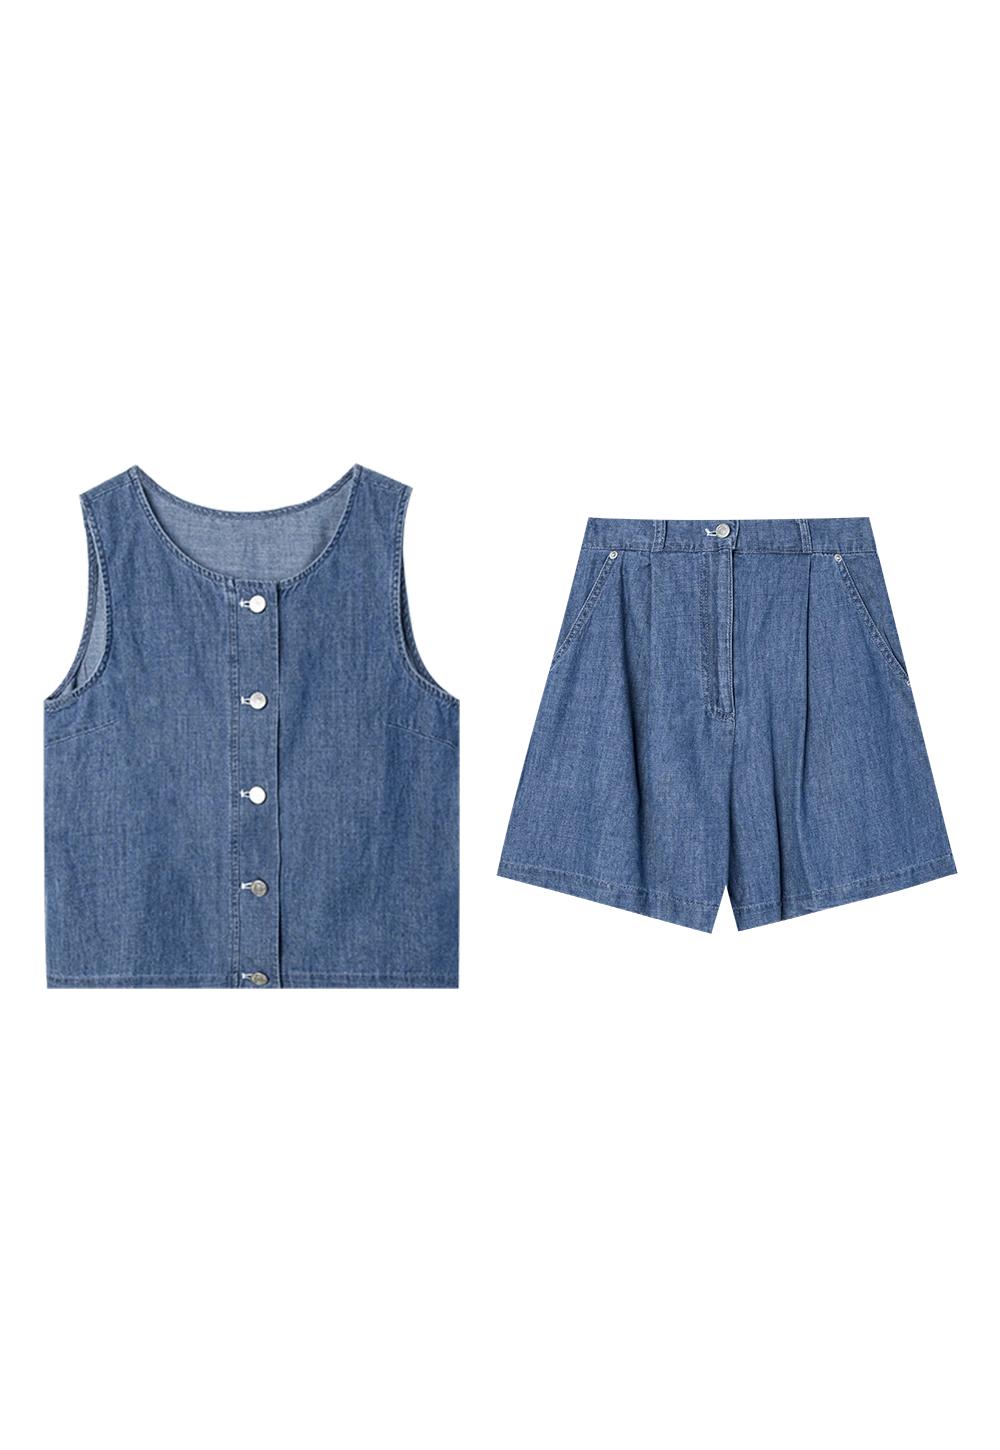 Women's Denim Vest and Skirt Set with Button Details